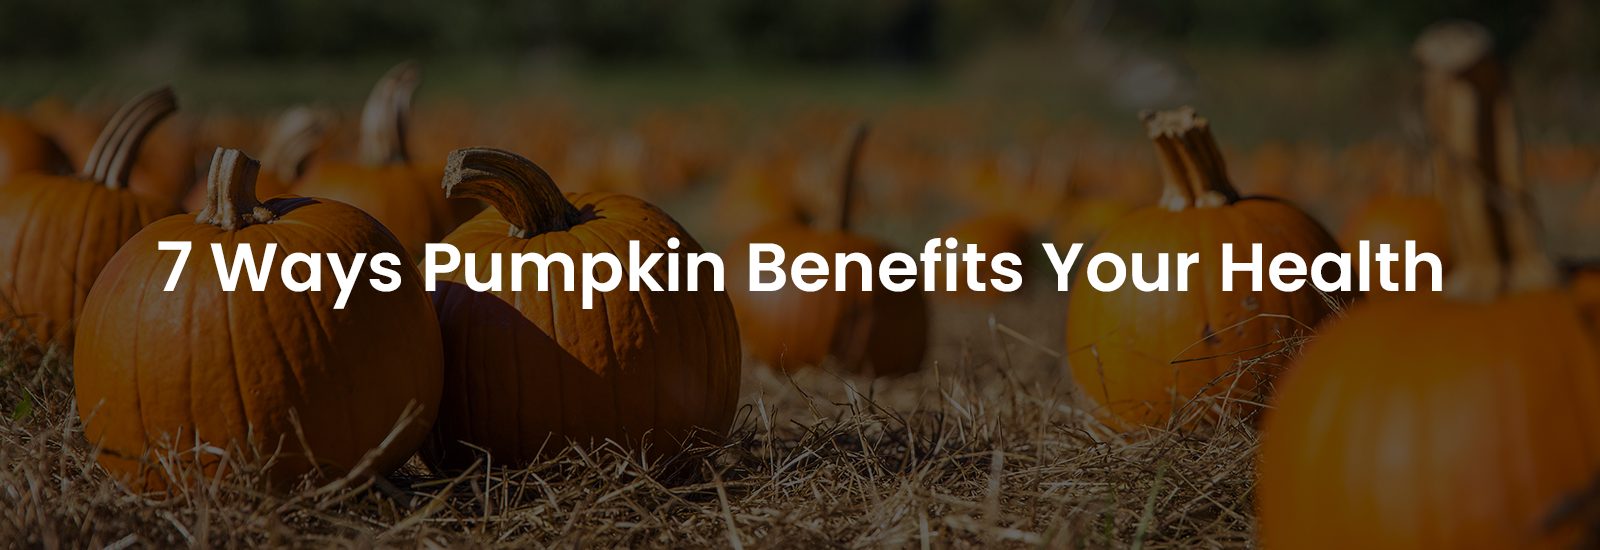 7 Ways Pumpkin Benefits Your Health | Banner Image